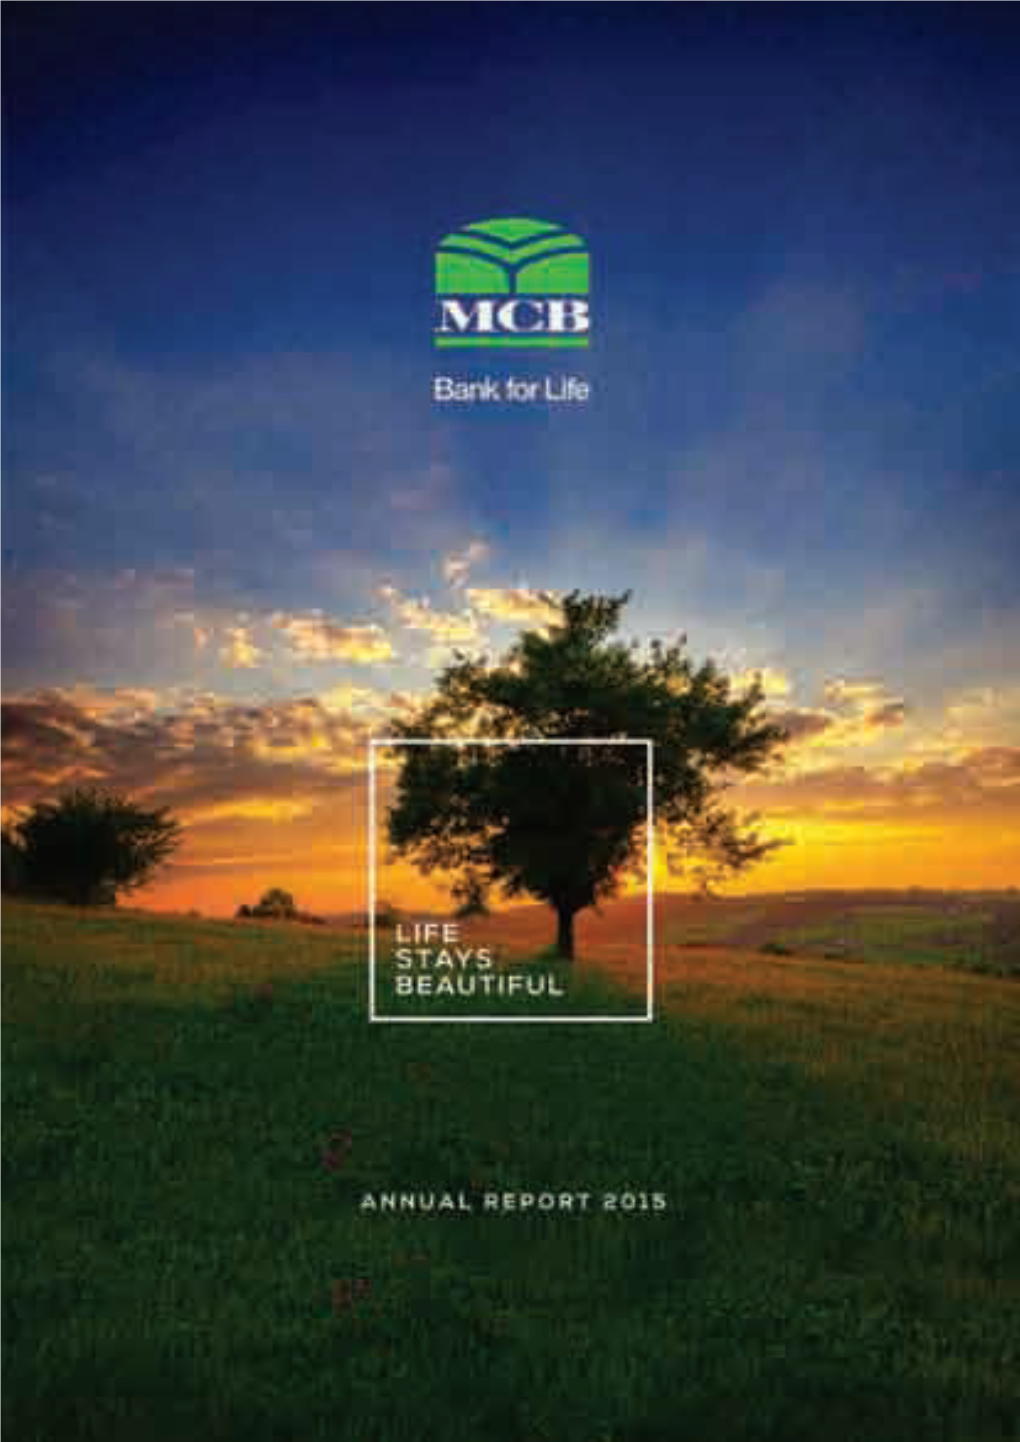 MCB Bank Annual Report 2015